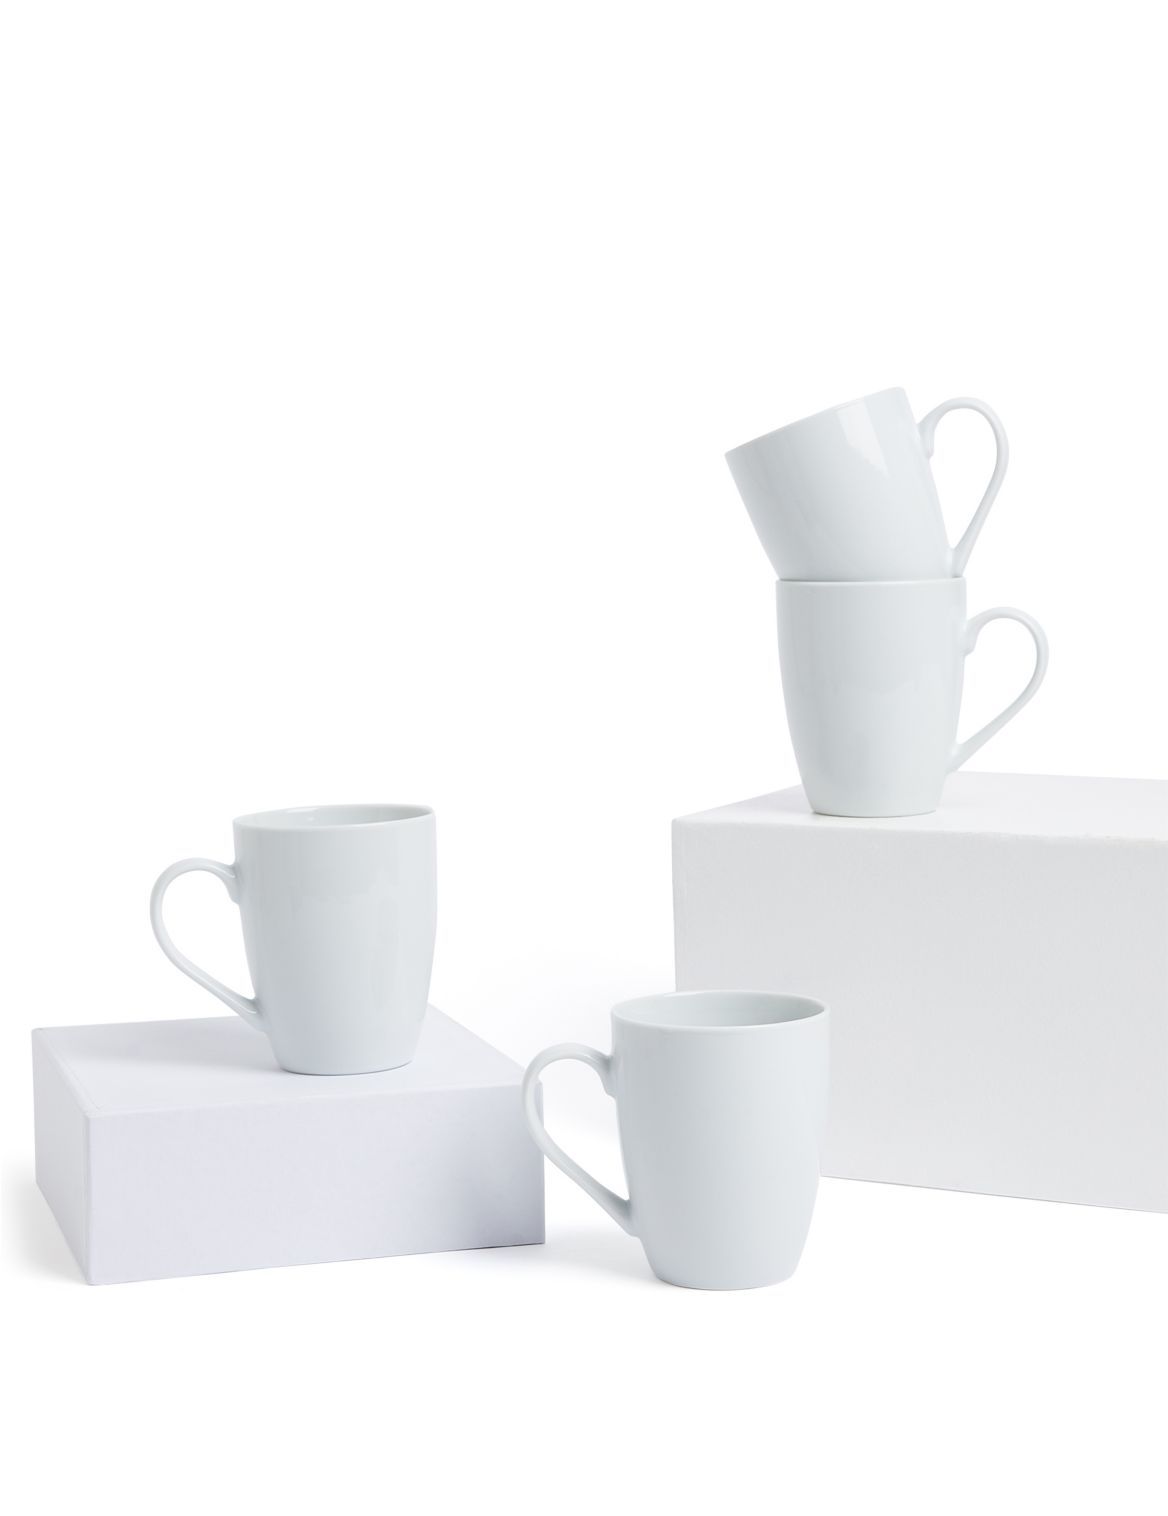 Image of Set of 4 Mugs white